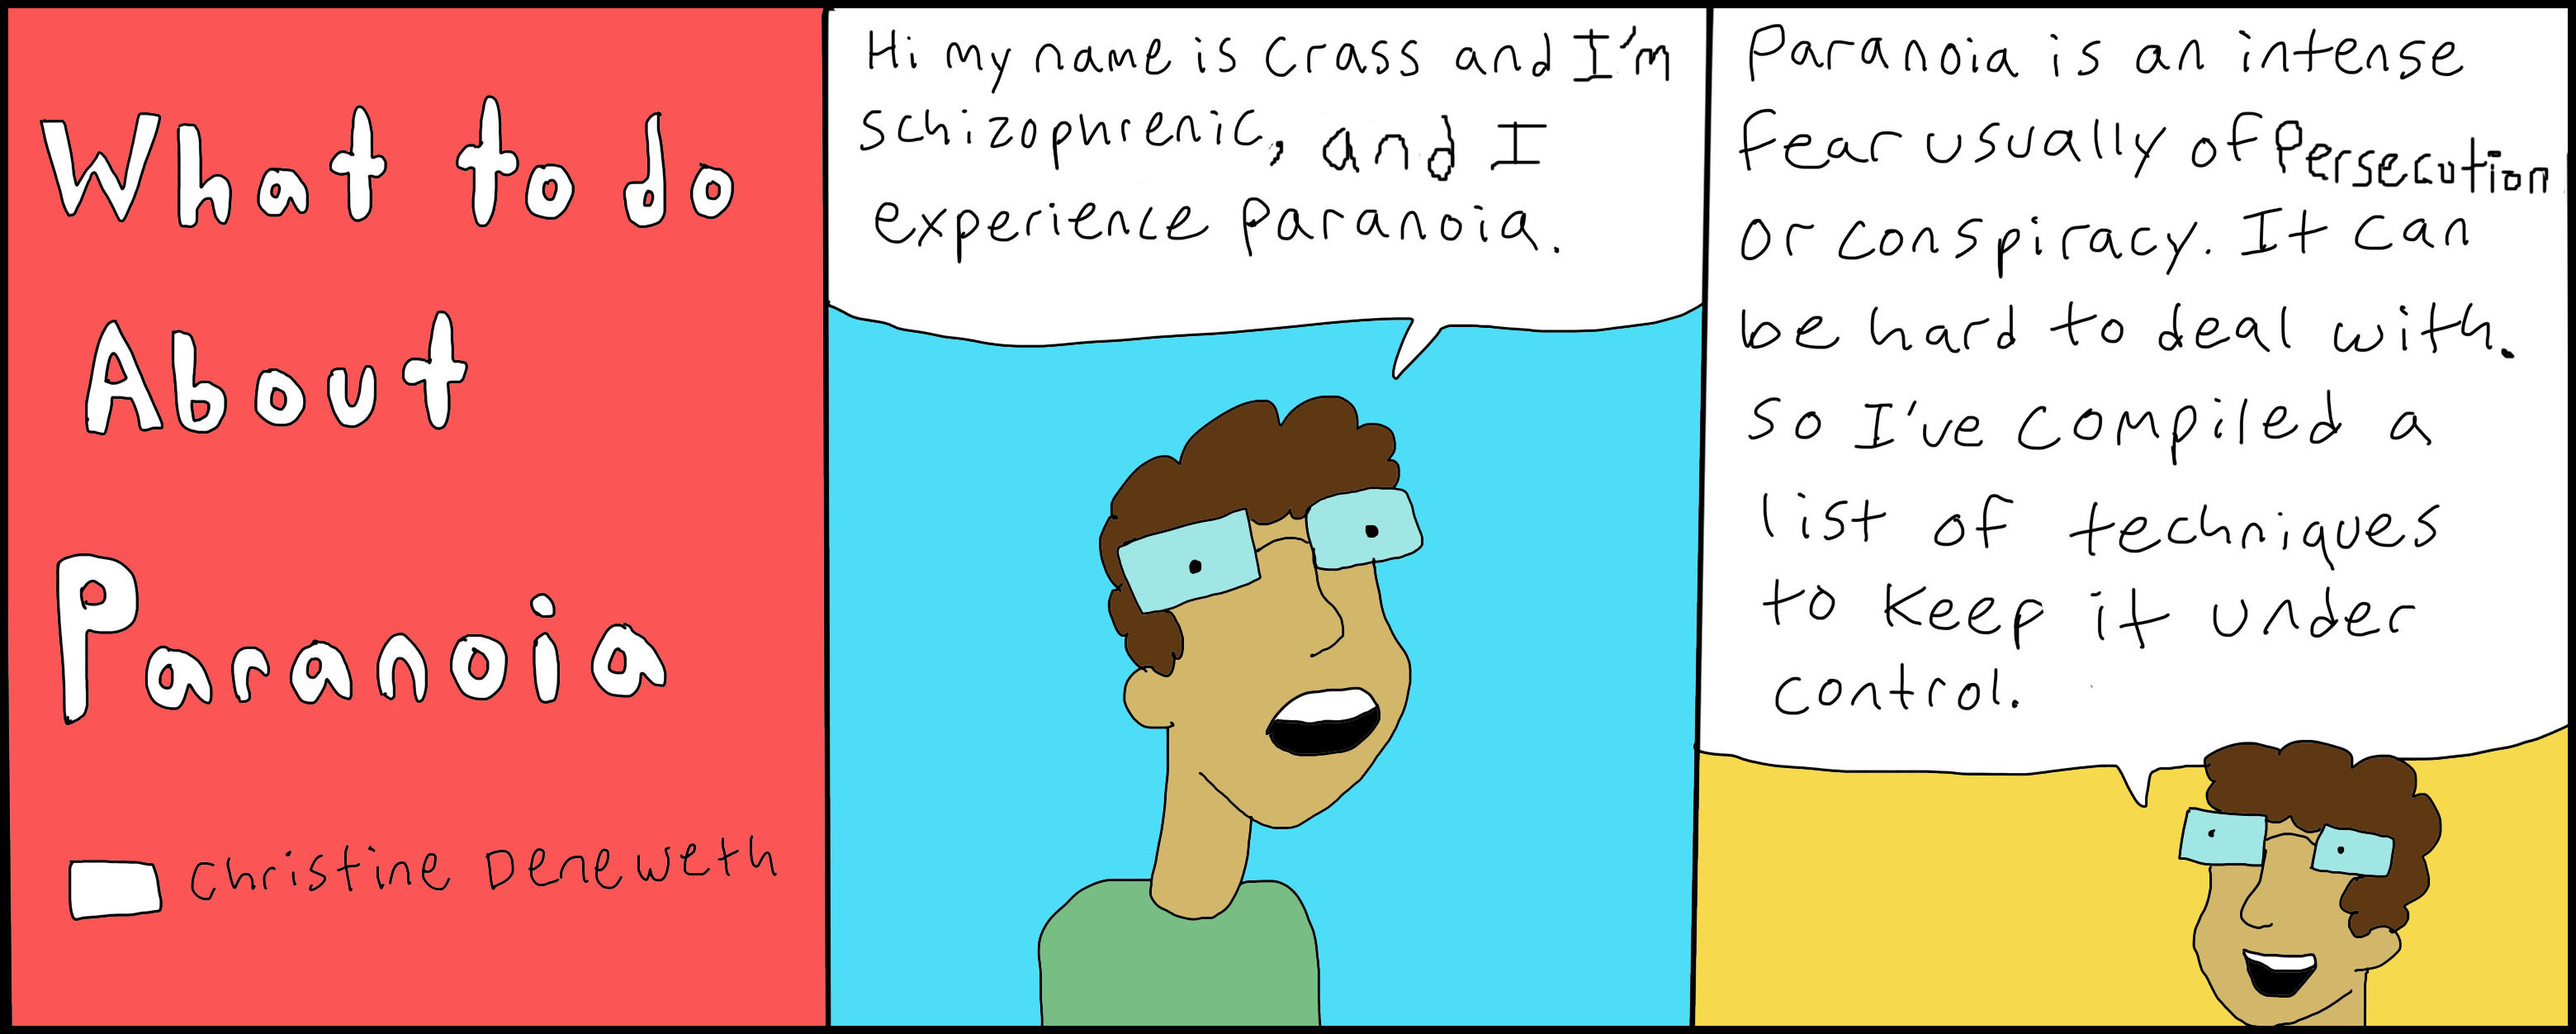 paranoia-1